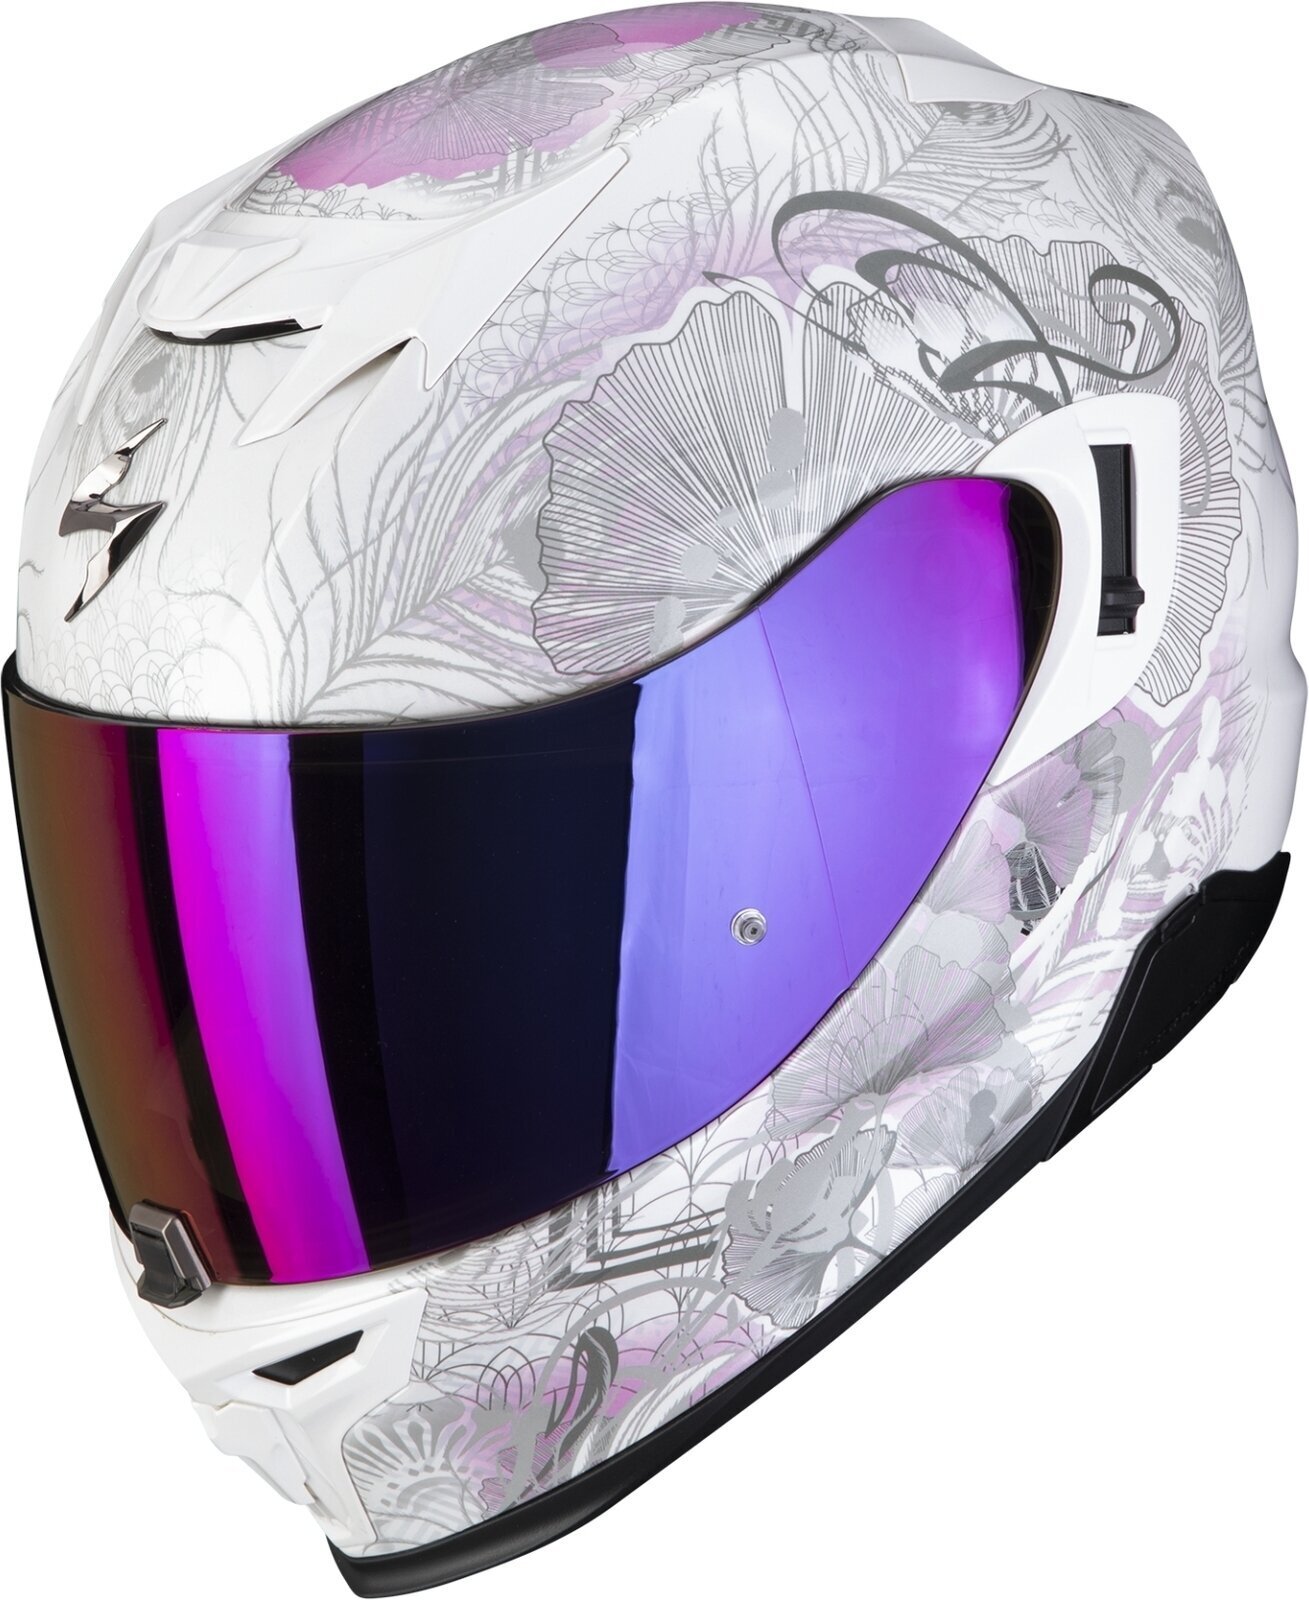 Helm Scorpion EXO 520 EVO AIR MELROSE Pearl White/Pink XS Helm